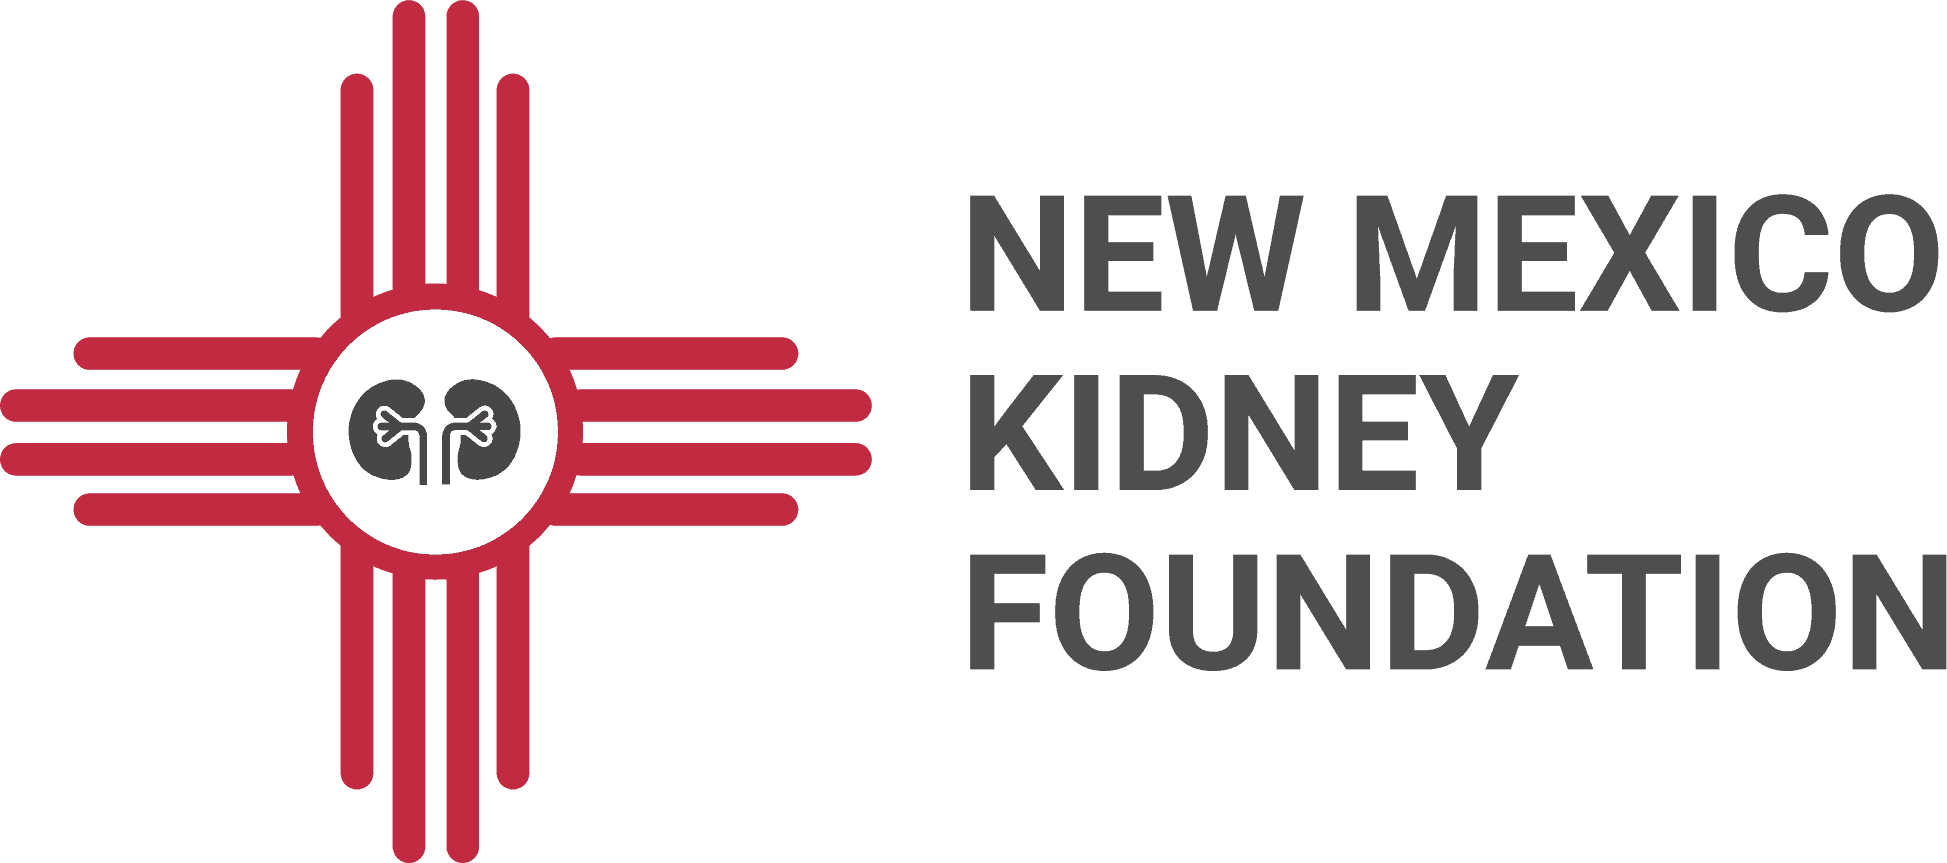 New Mexico Kidney Foundation logo